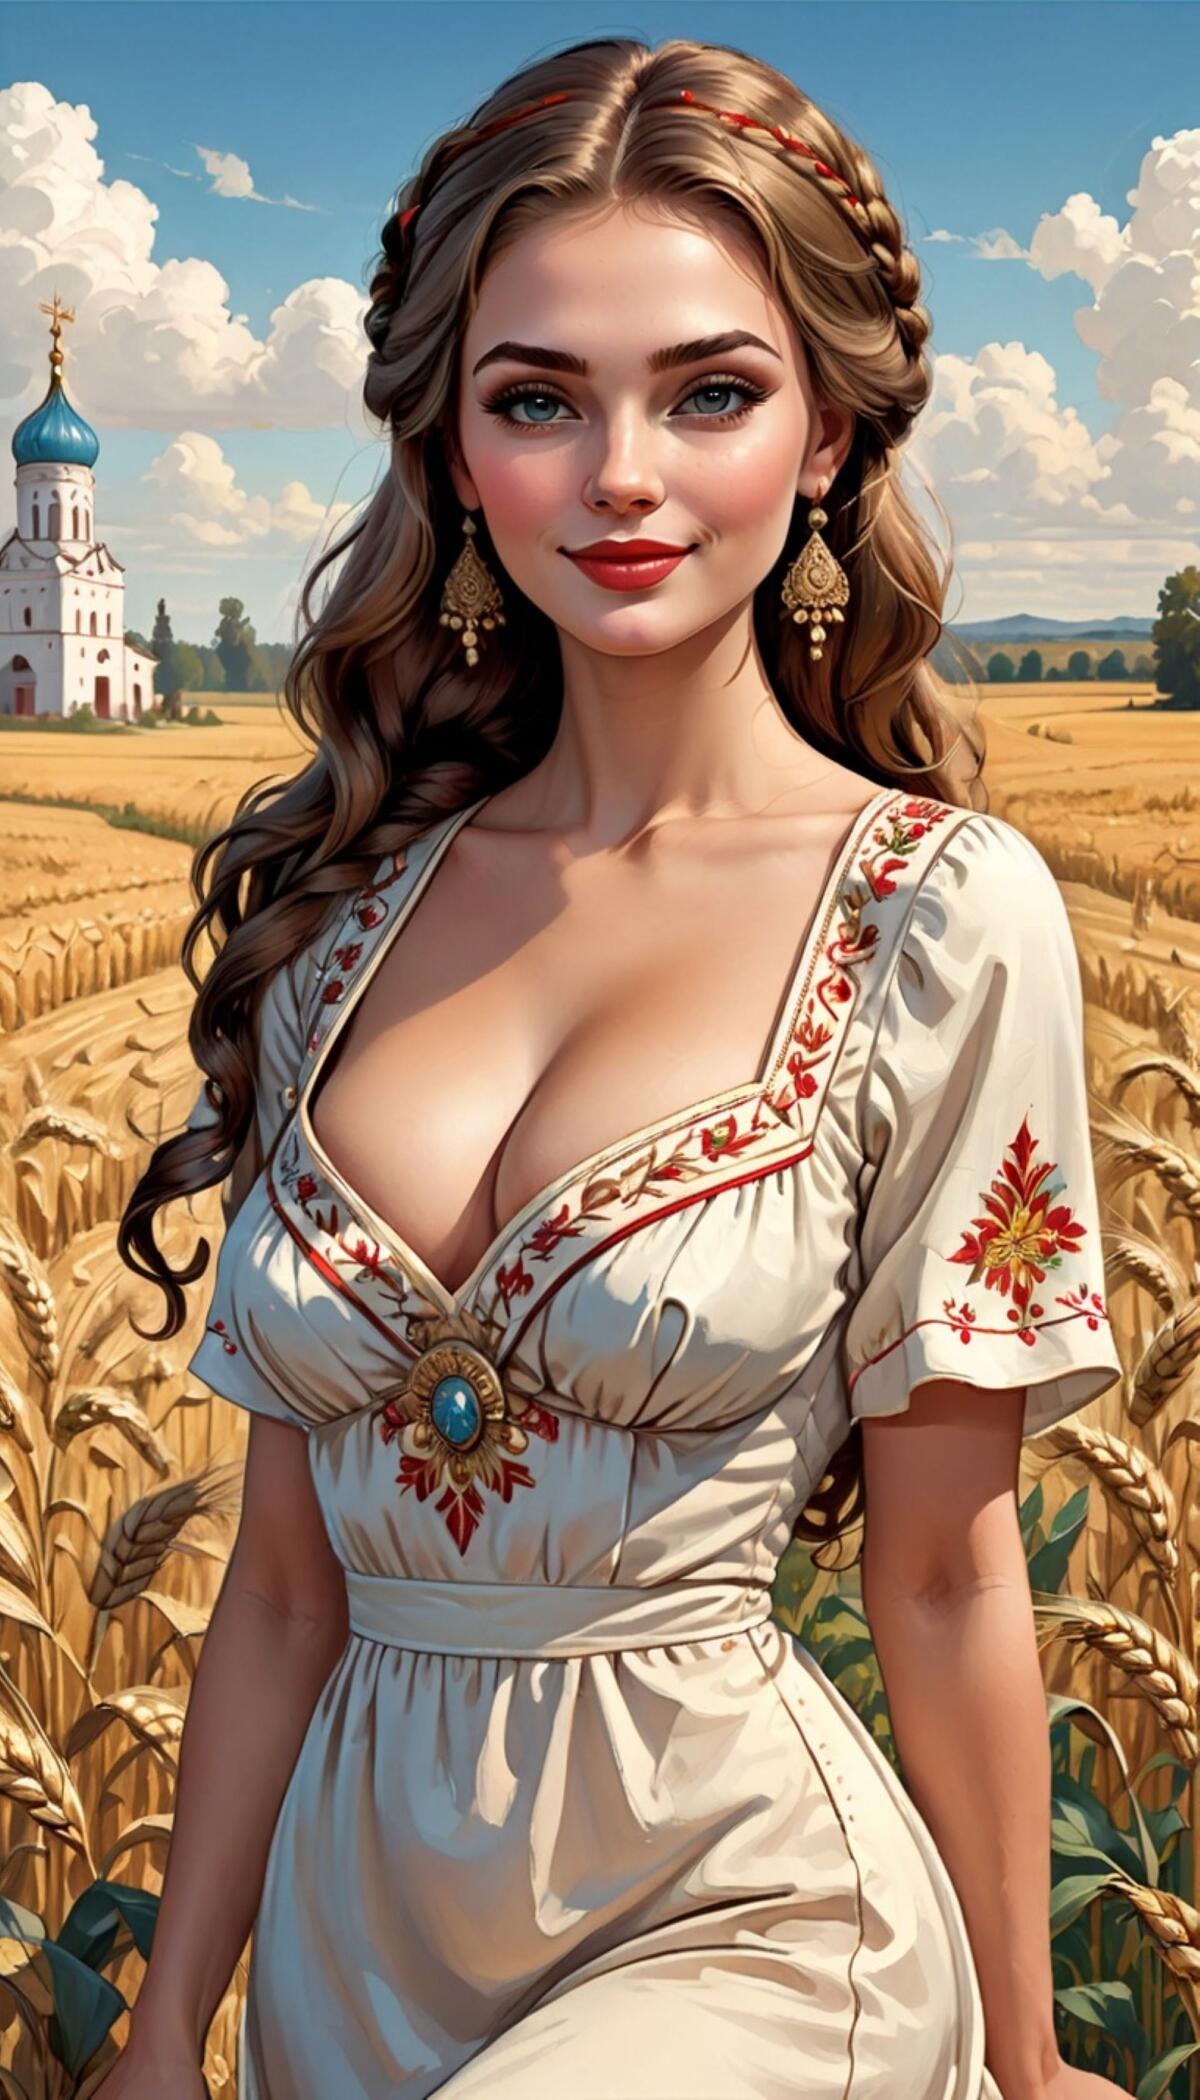 A girl in a broom field